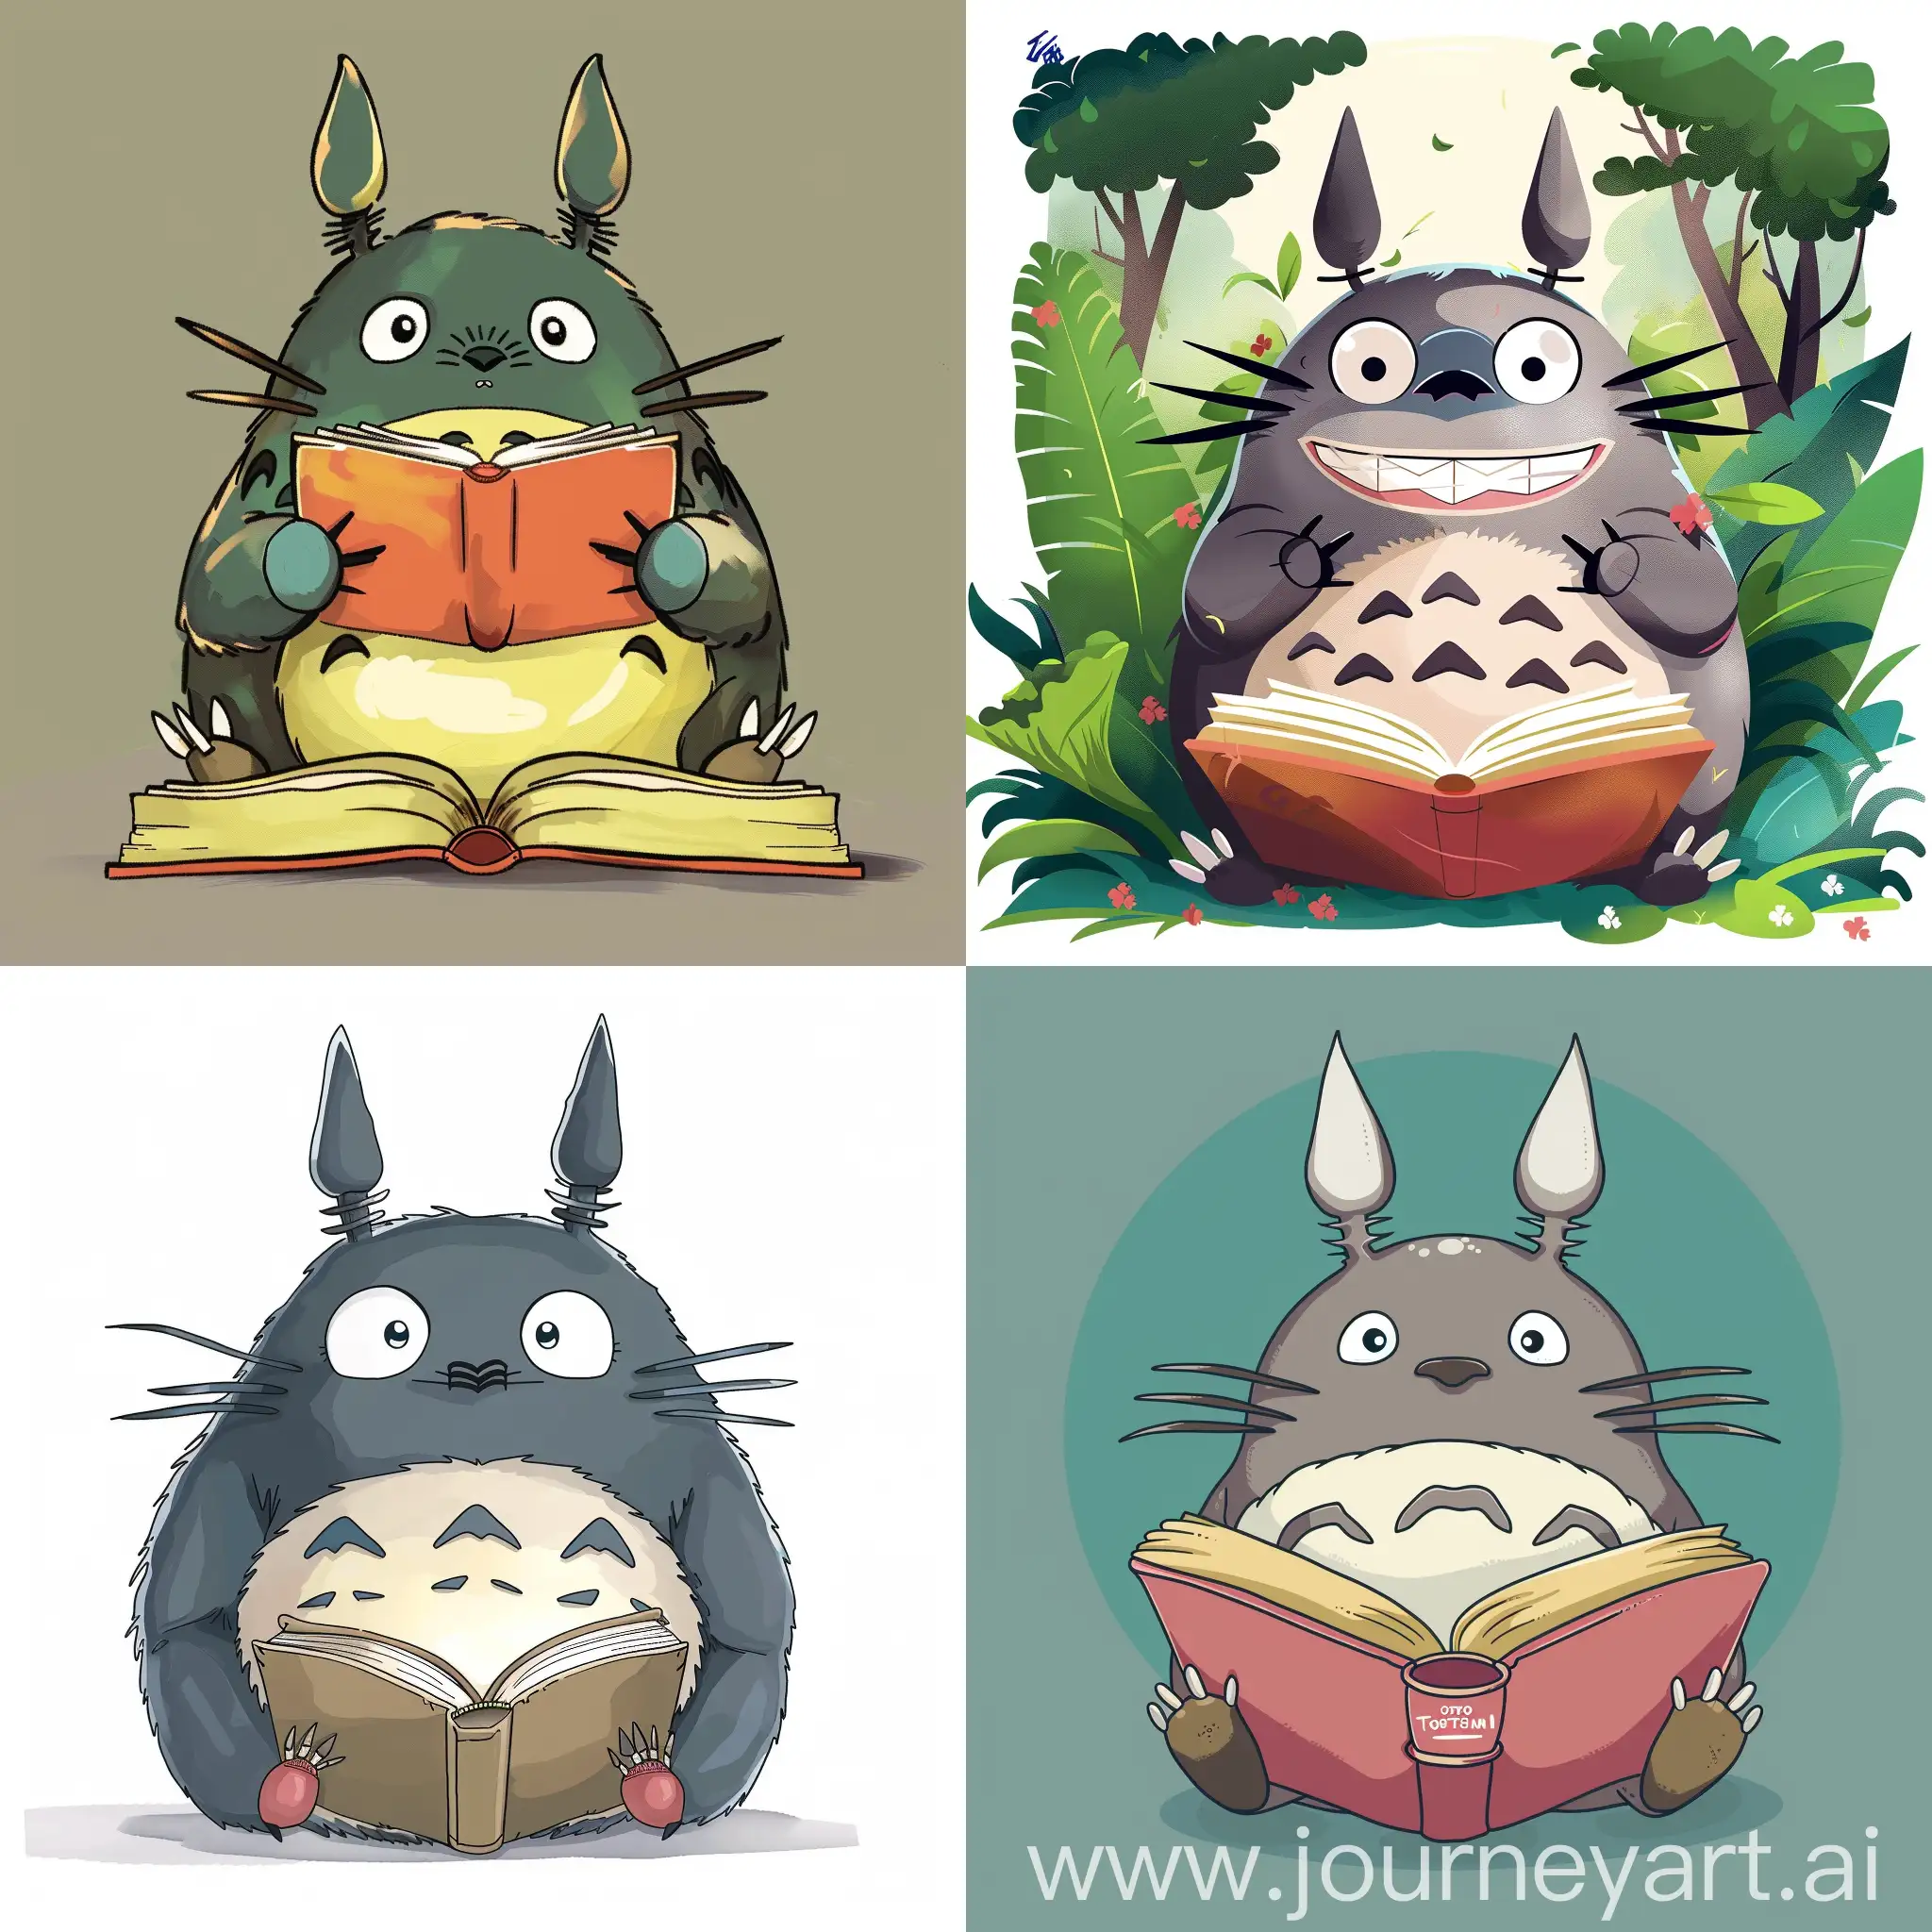 Whimsical-Totoro-Book-Icon-Charming-Studio-Ghibli-Style-Art